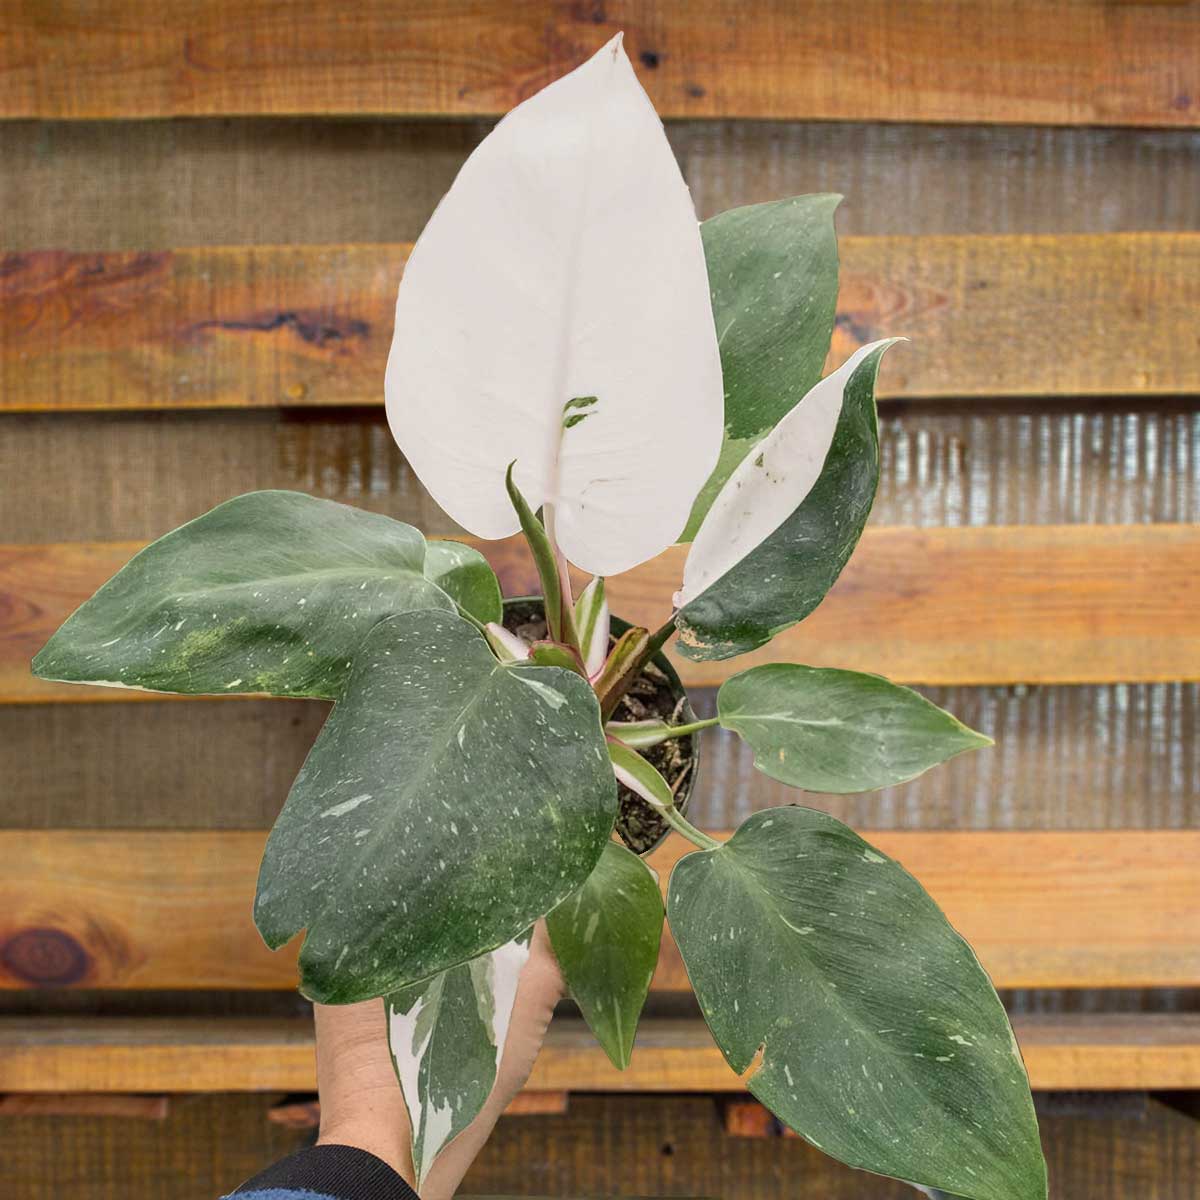 philodendron white princess- best online plant nursery | houseplantsale.com - houseplants for sale online | best indoor plants | forget me not flower market